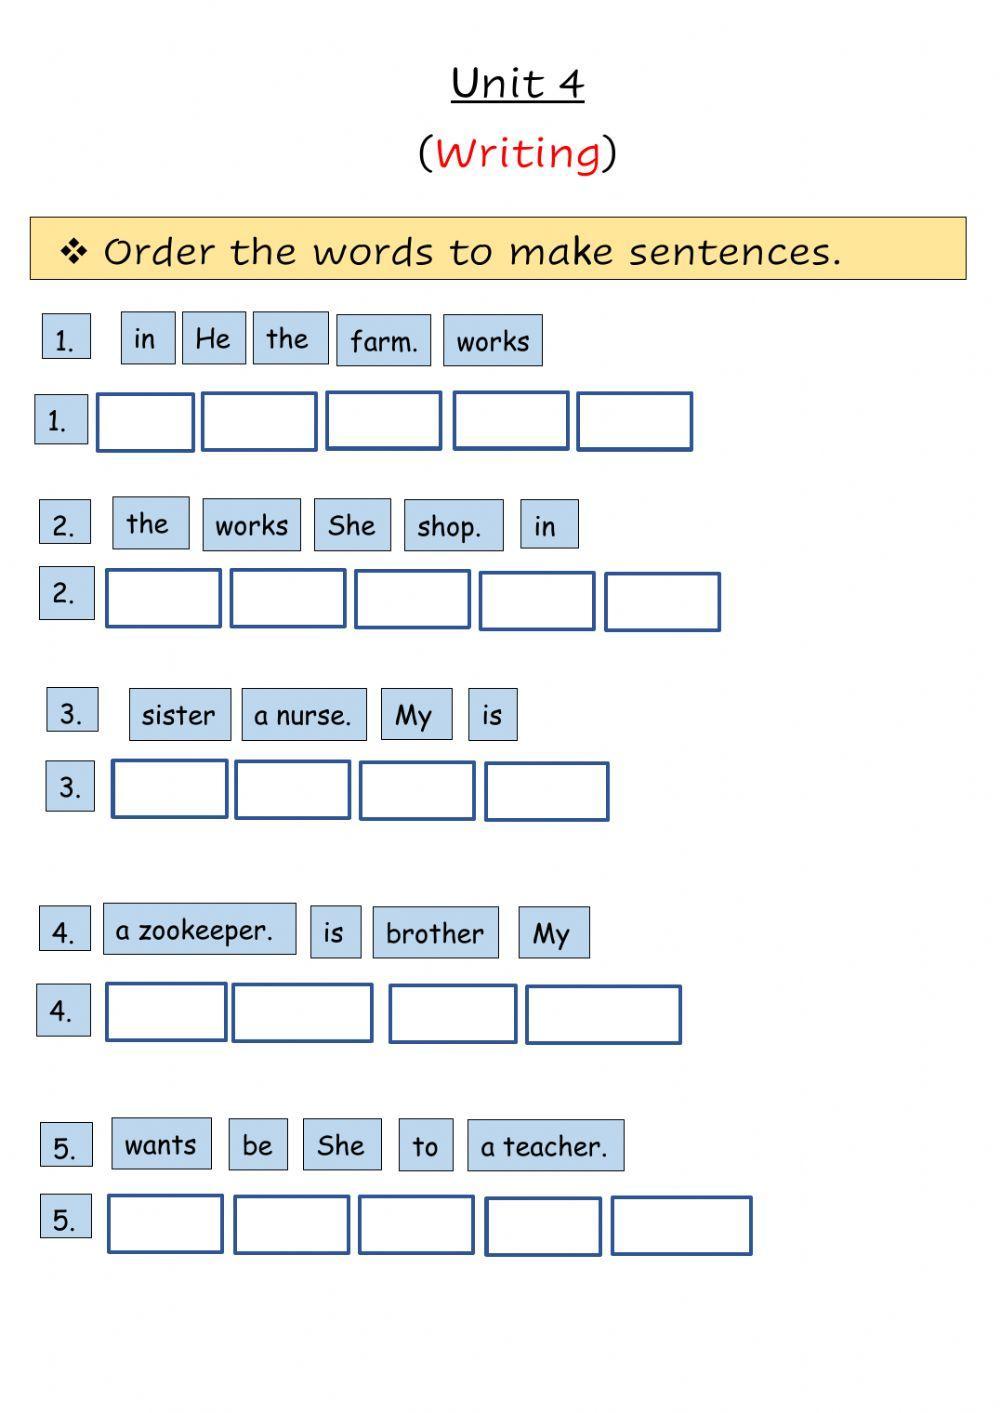 Writing sentences